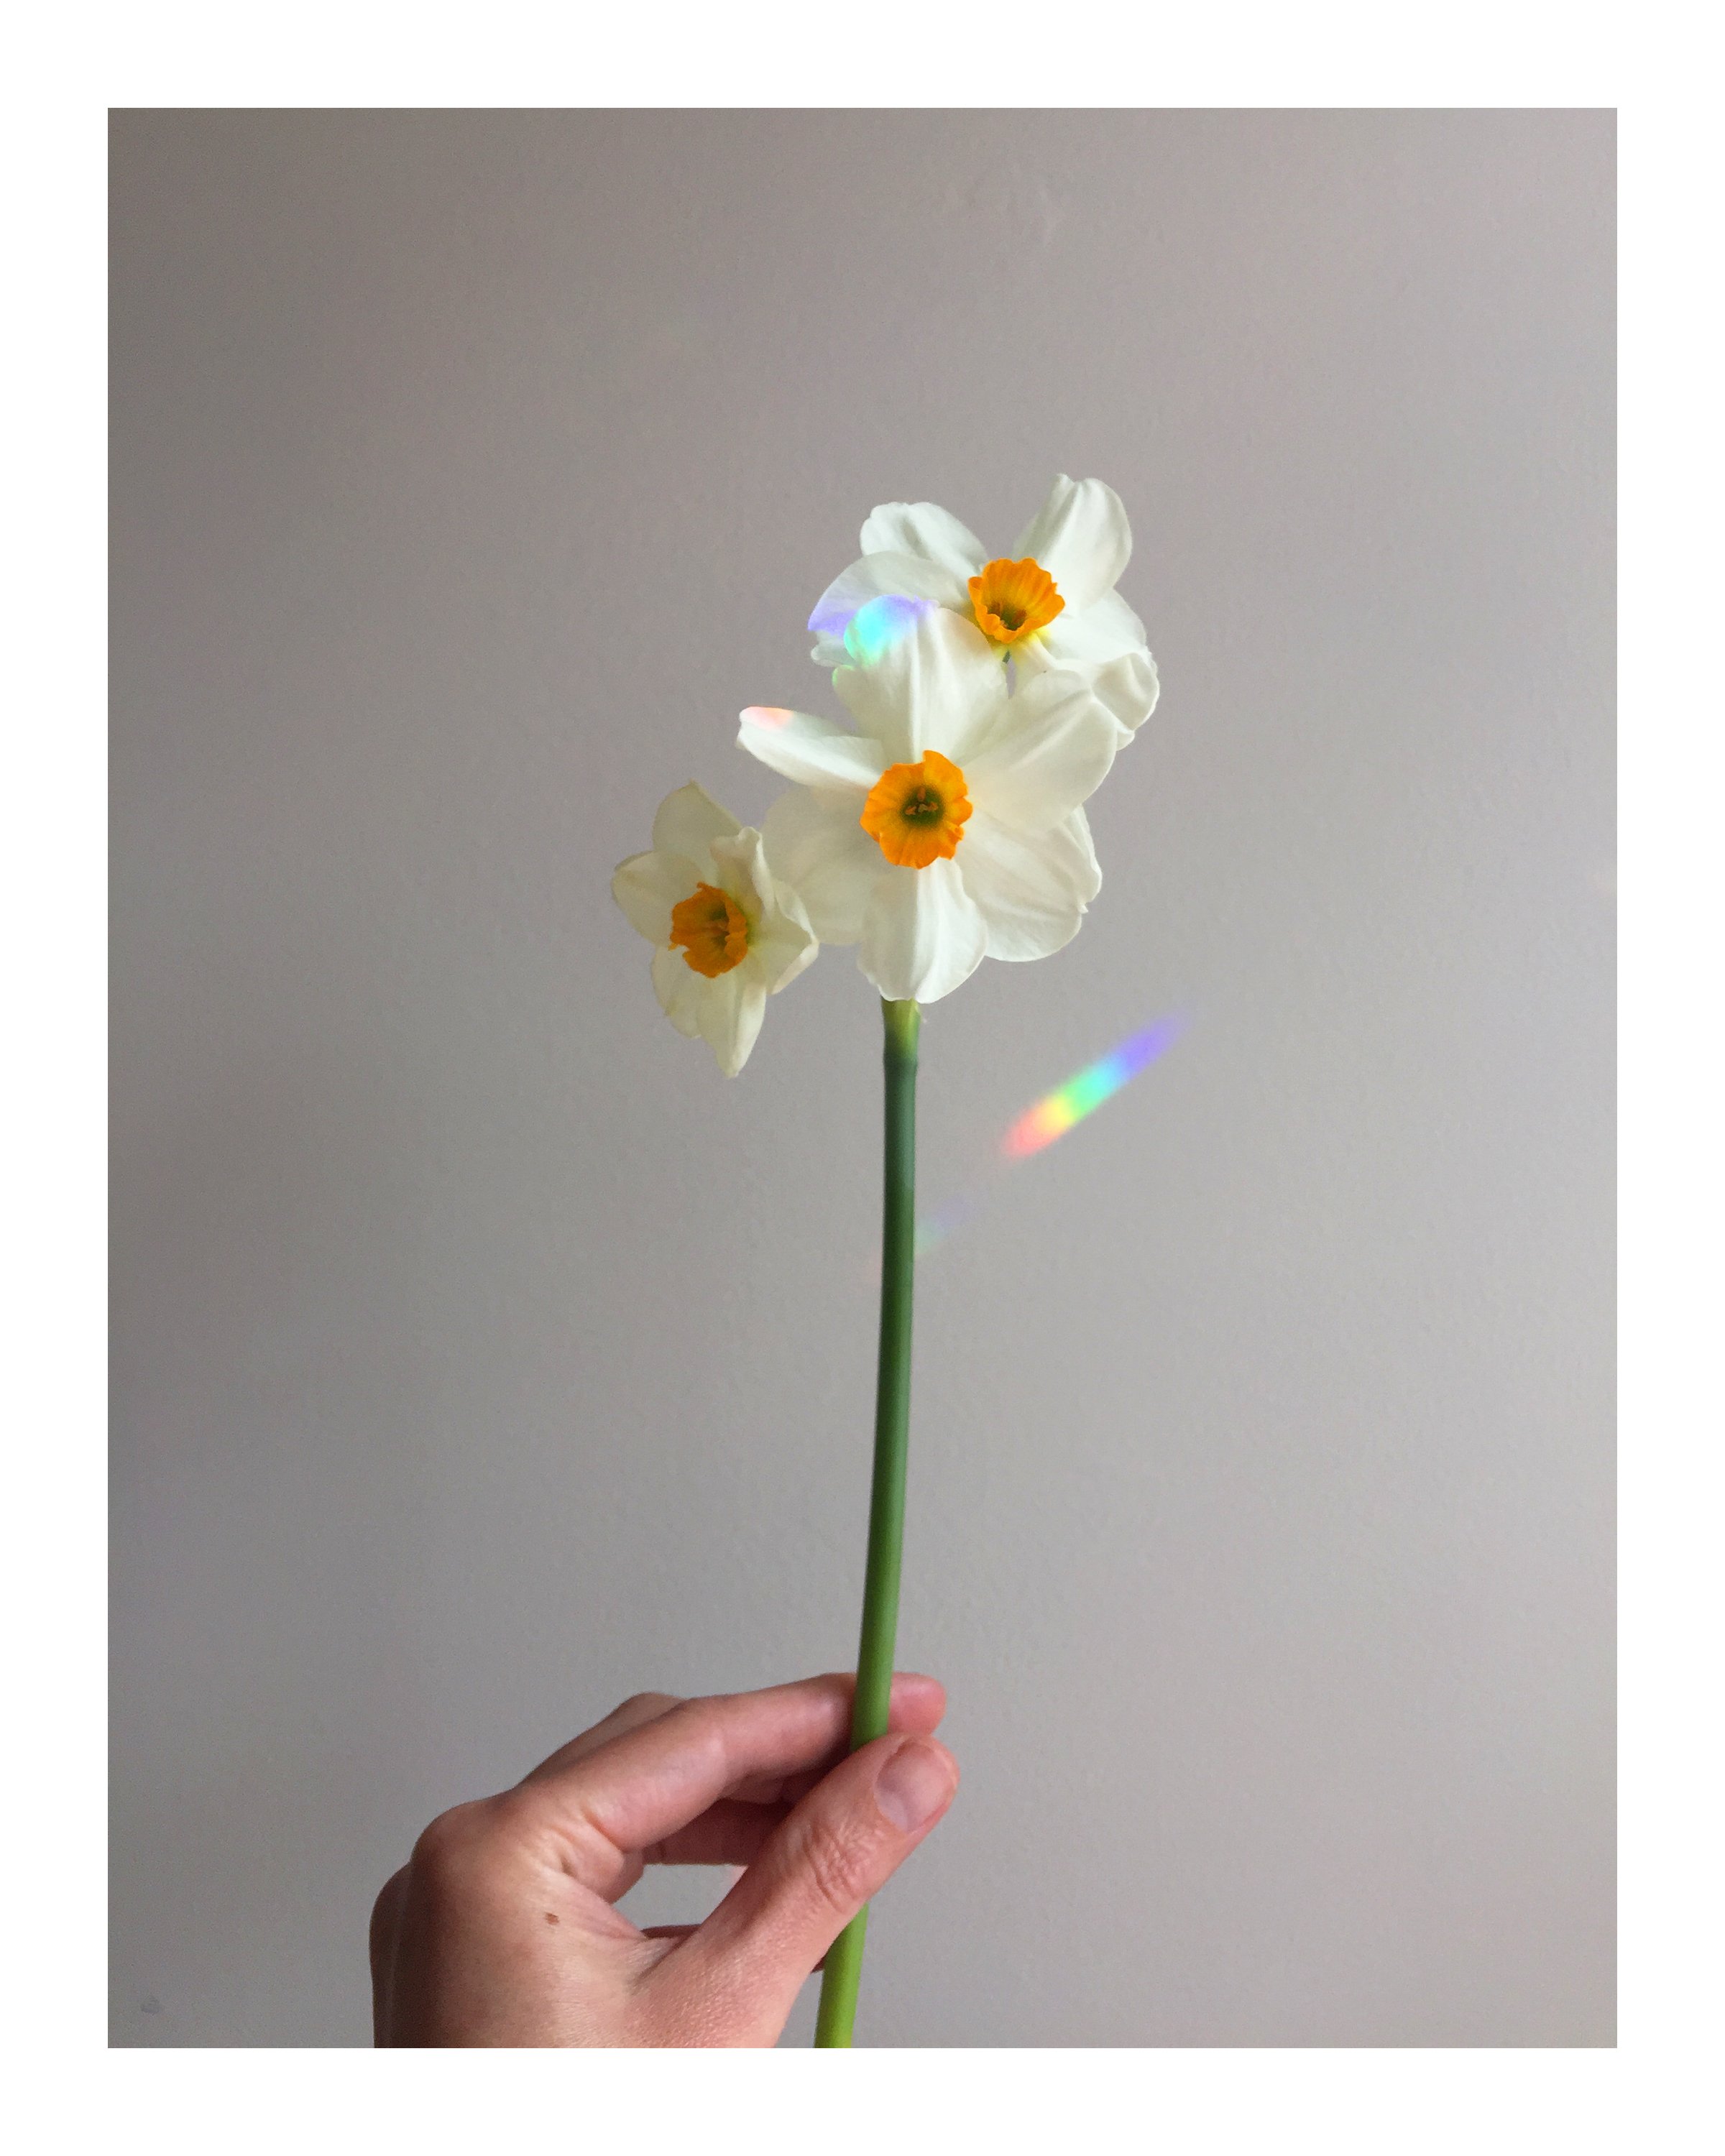 Daffodils.jpg